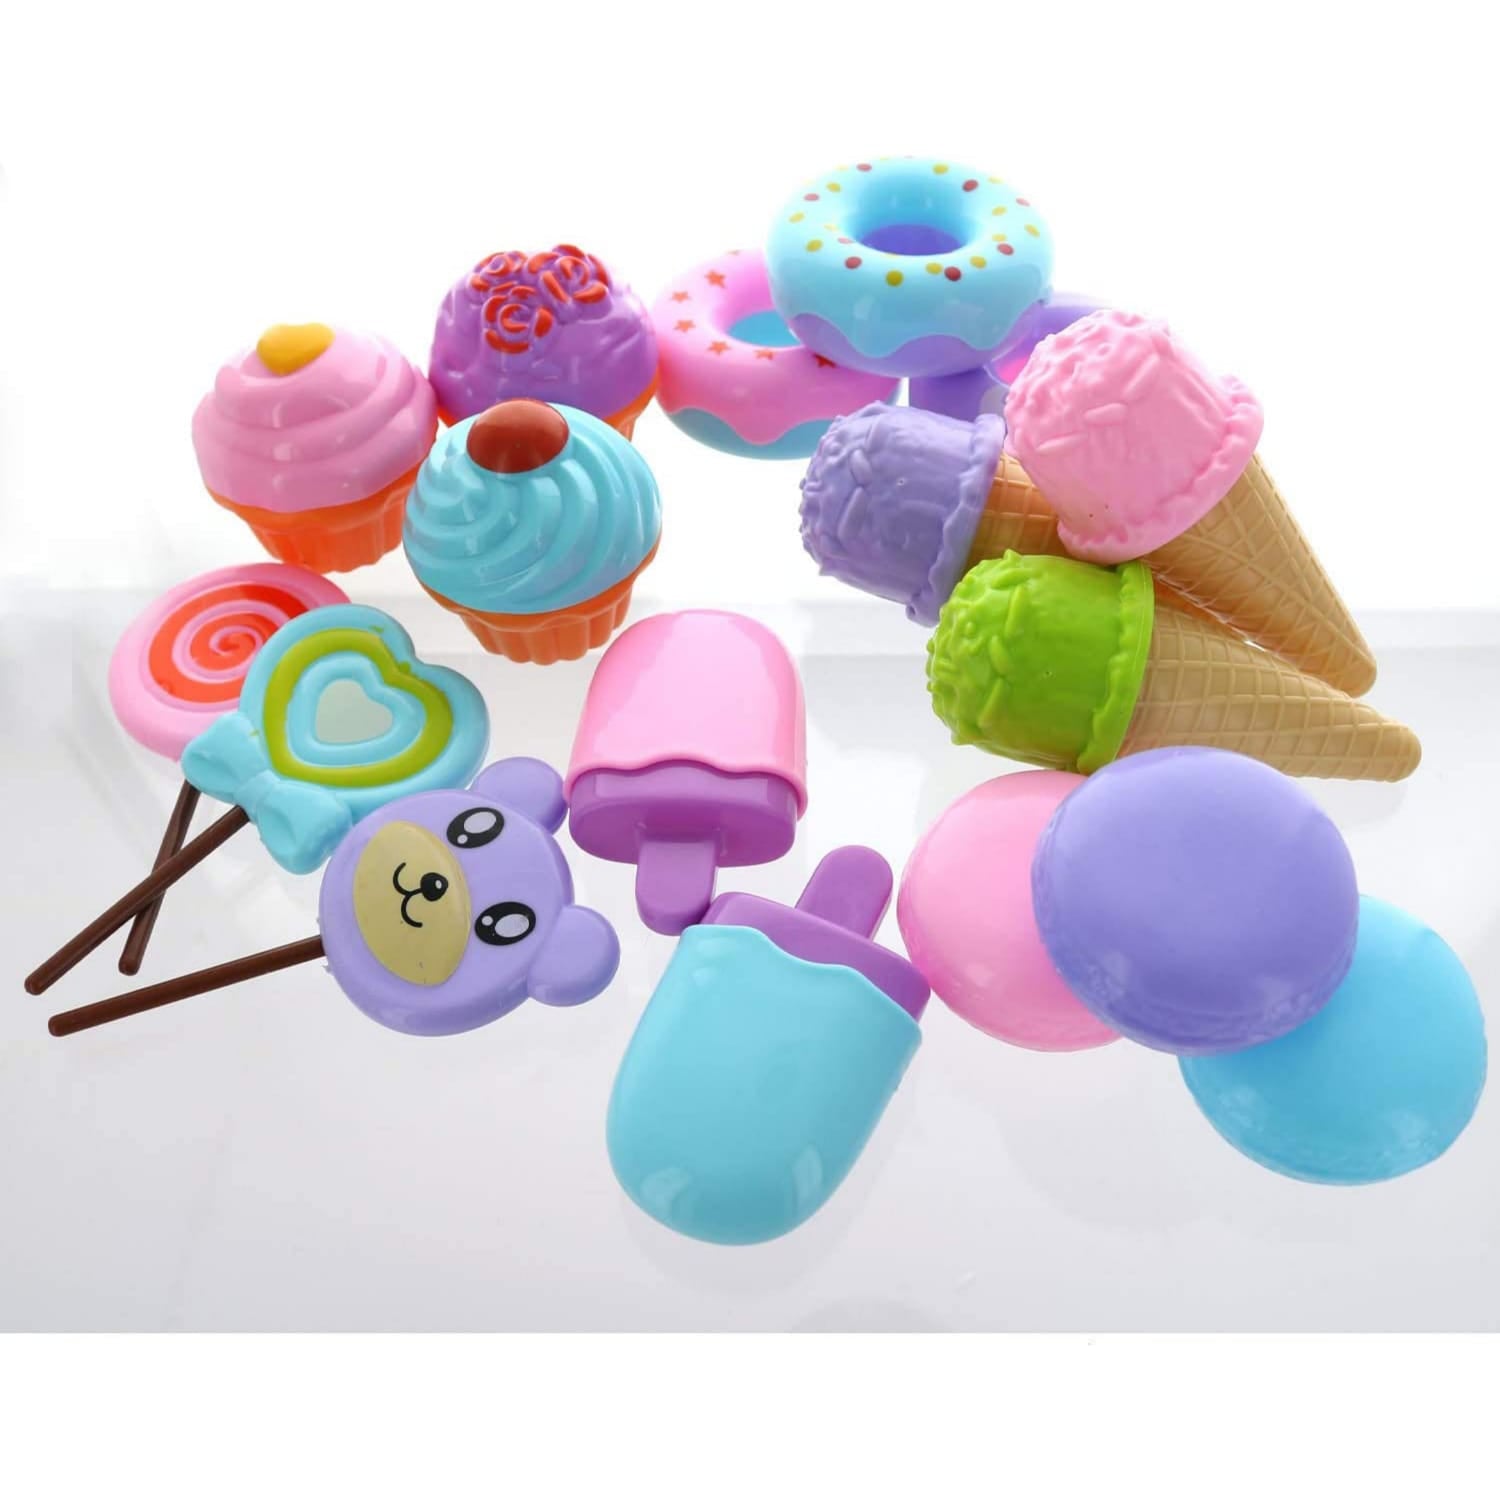 Pretend Play Food Dessert Set Toy for Kids